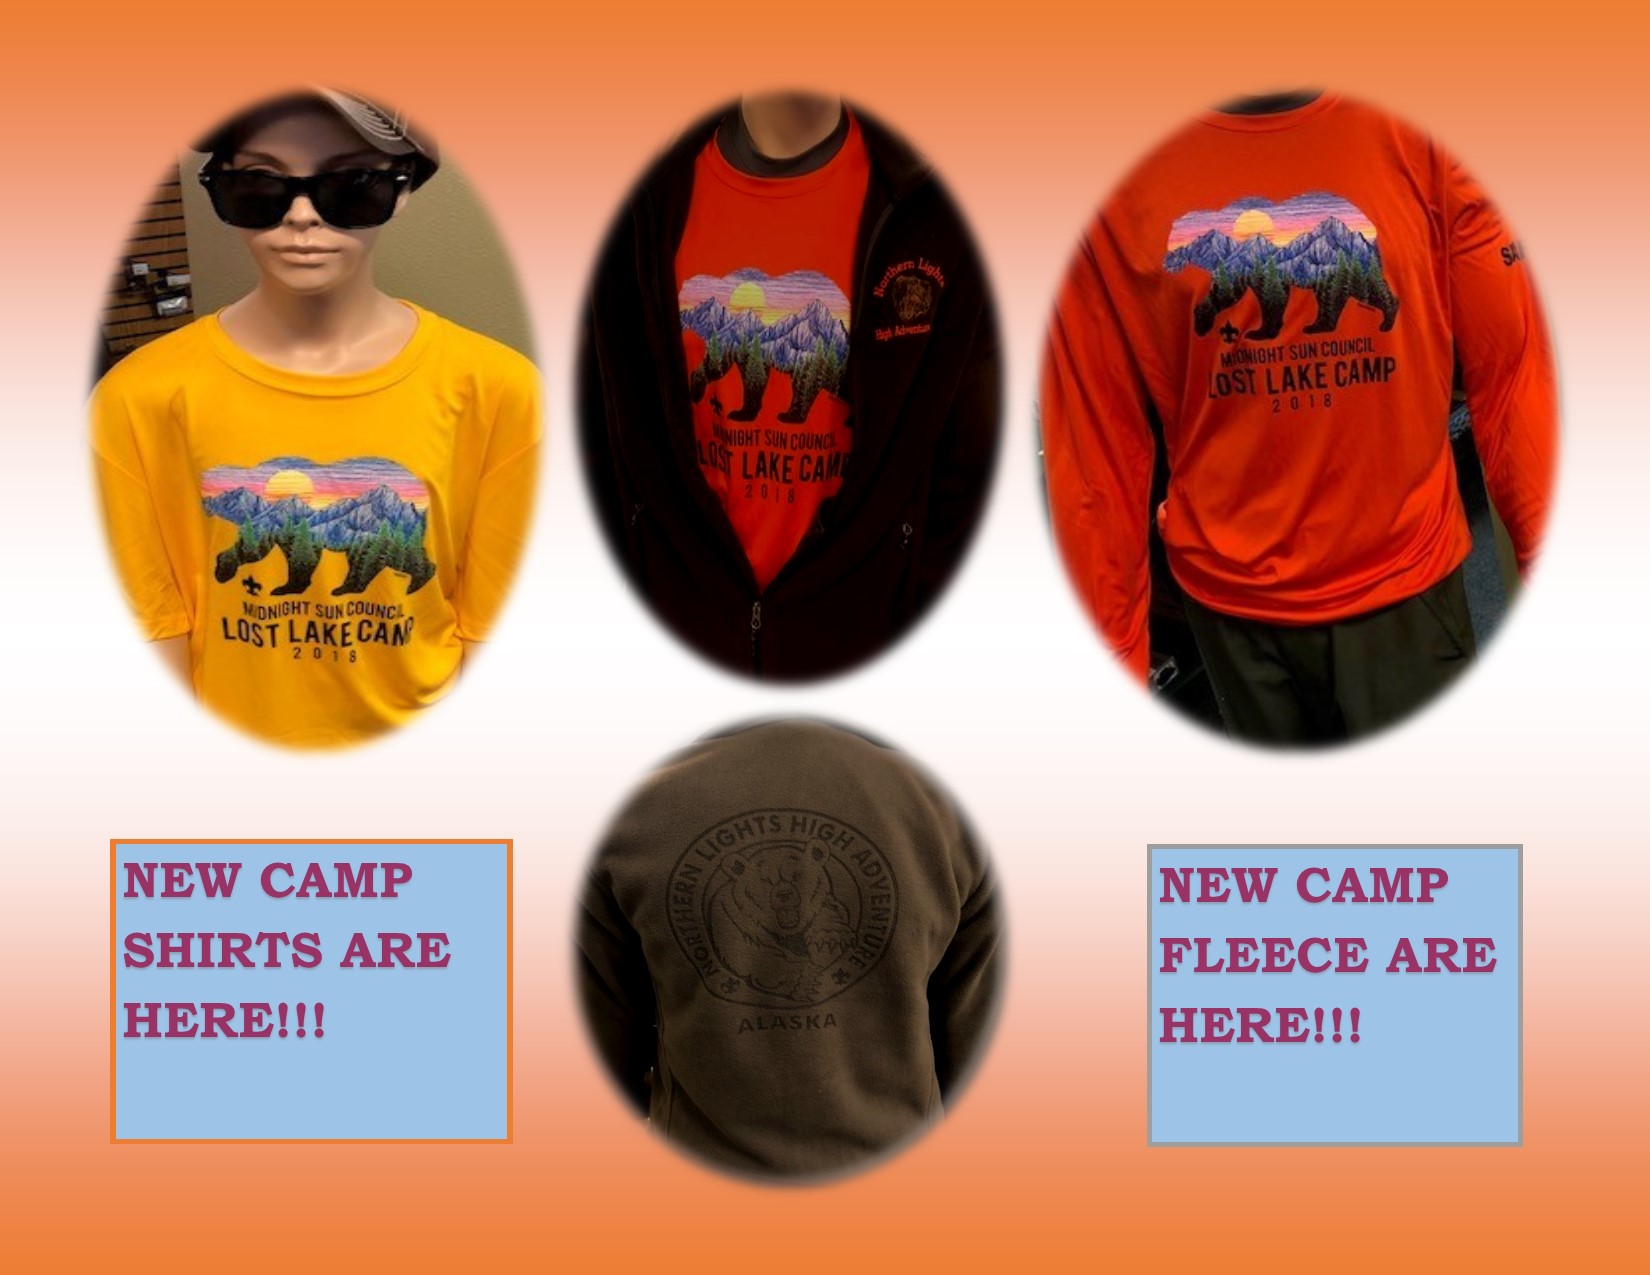 New Camp Shirts